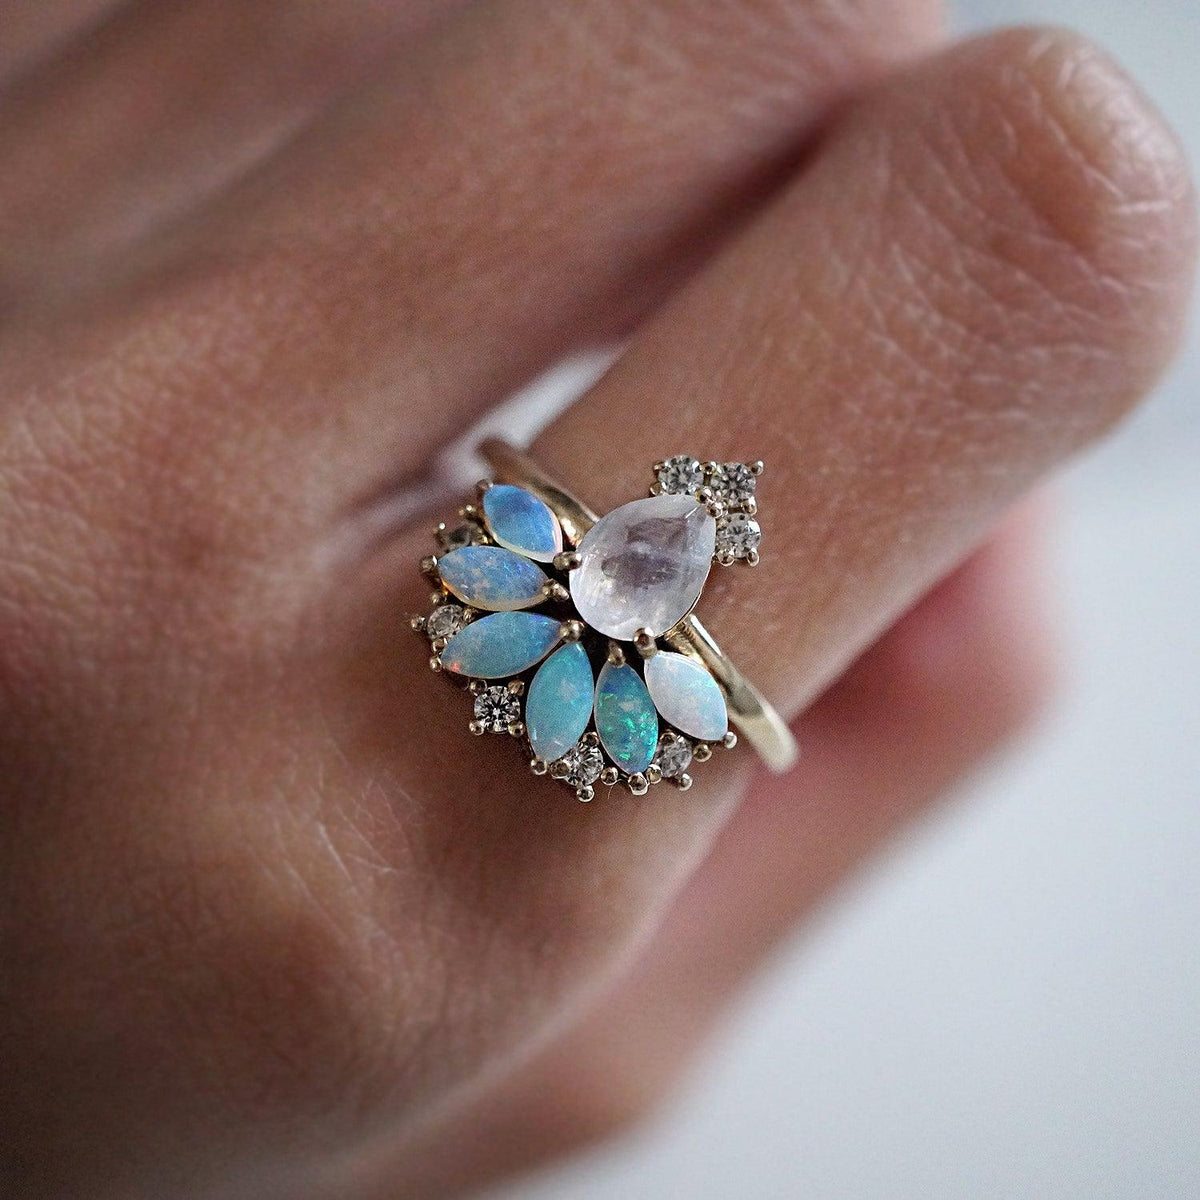 Fairydust Opal Moonstone Diamond Ring - Tippy Taste Jewelry